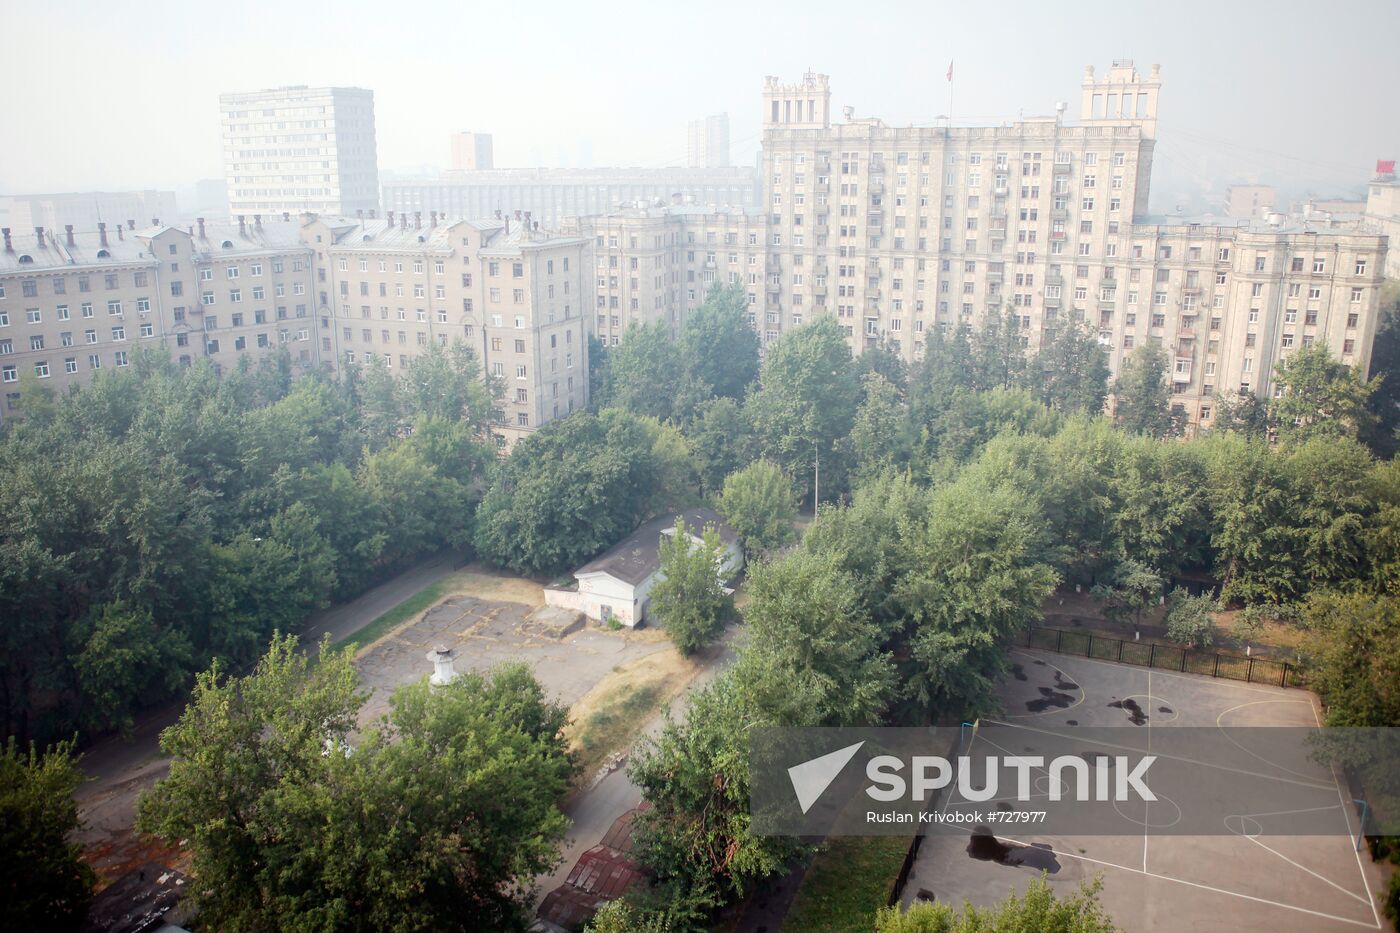 Apartment houses in Leningradskoye Highway